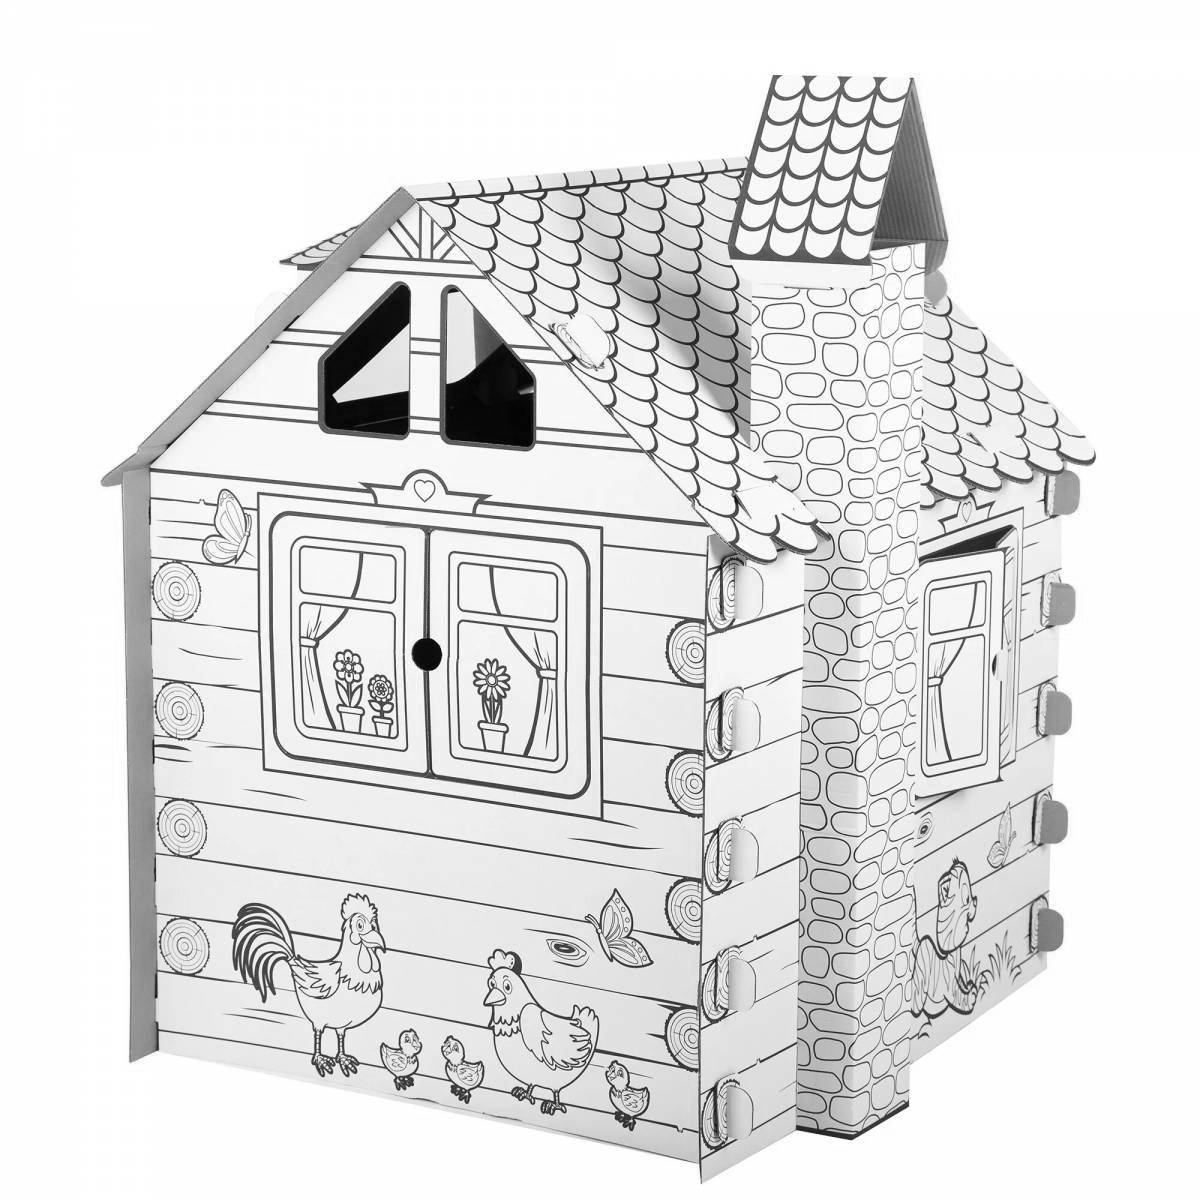 Cardboard playhouse #8